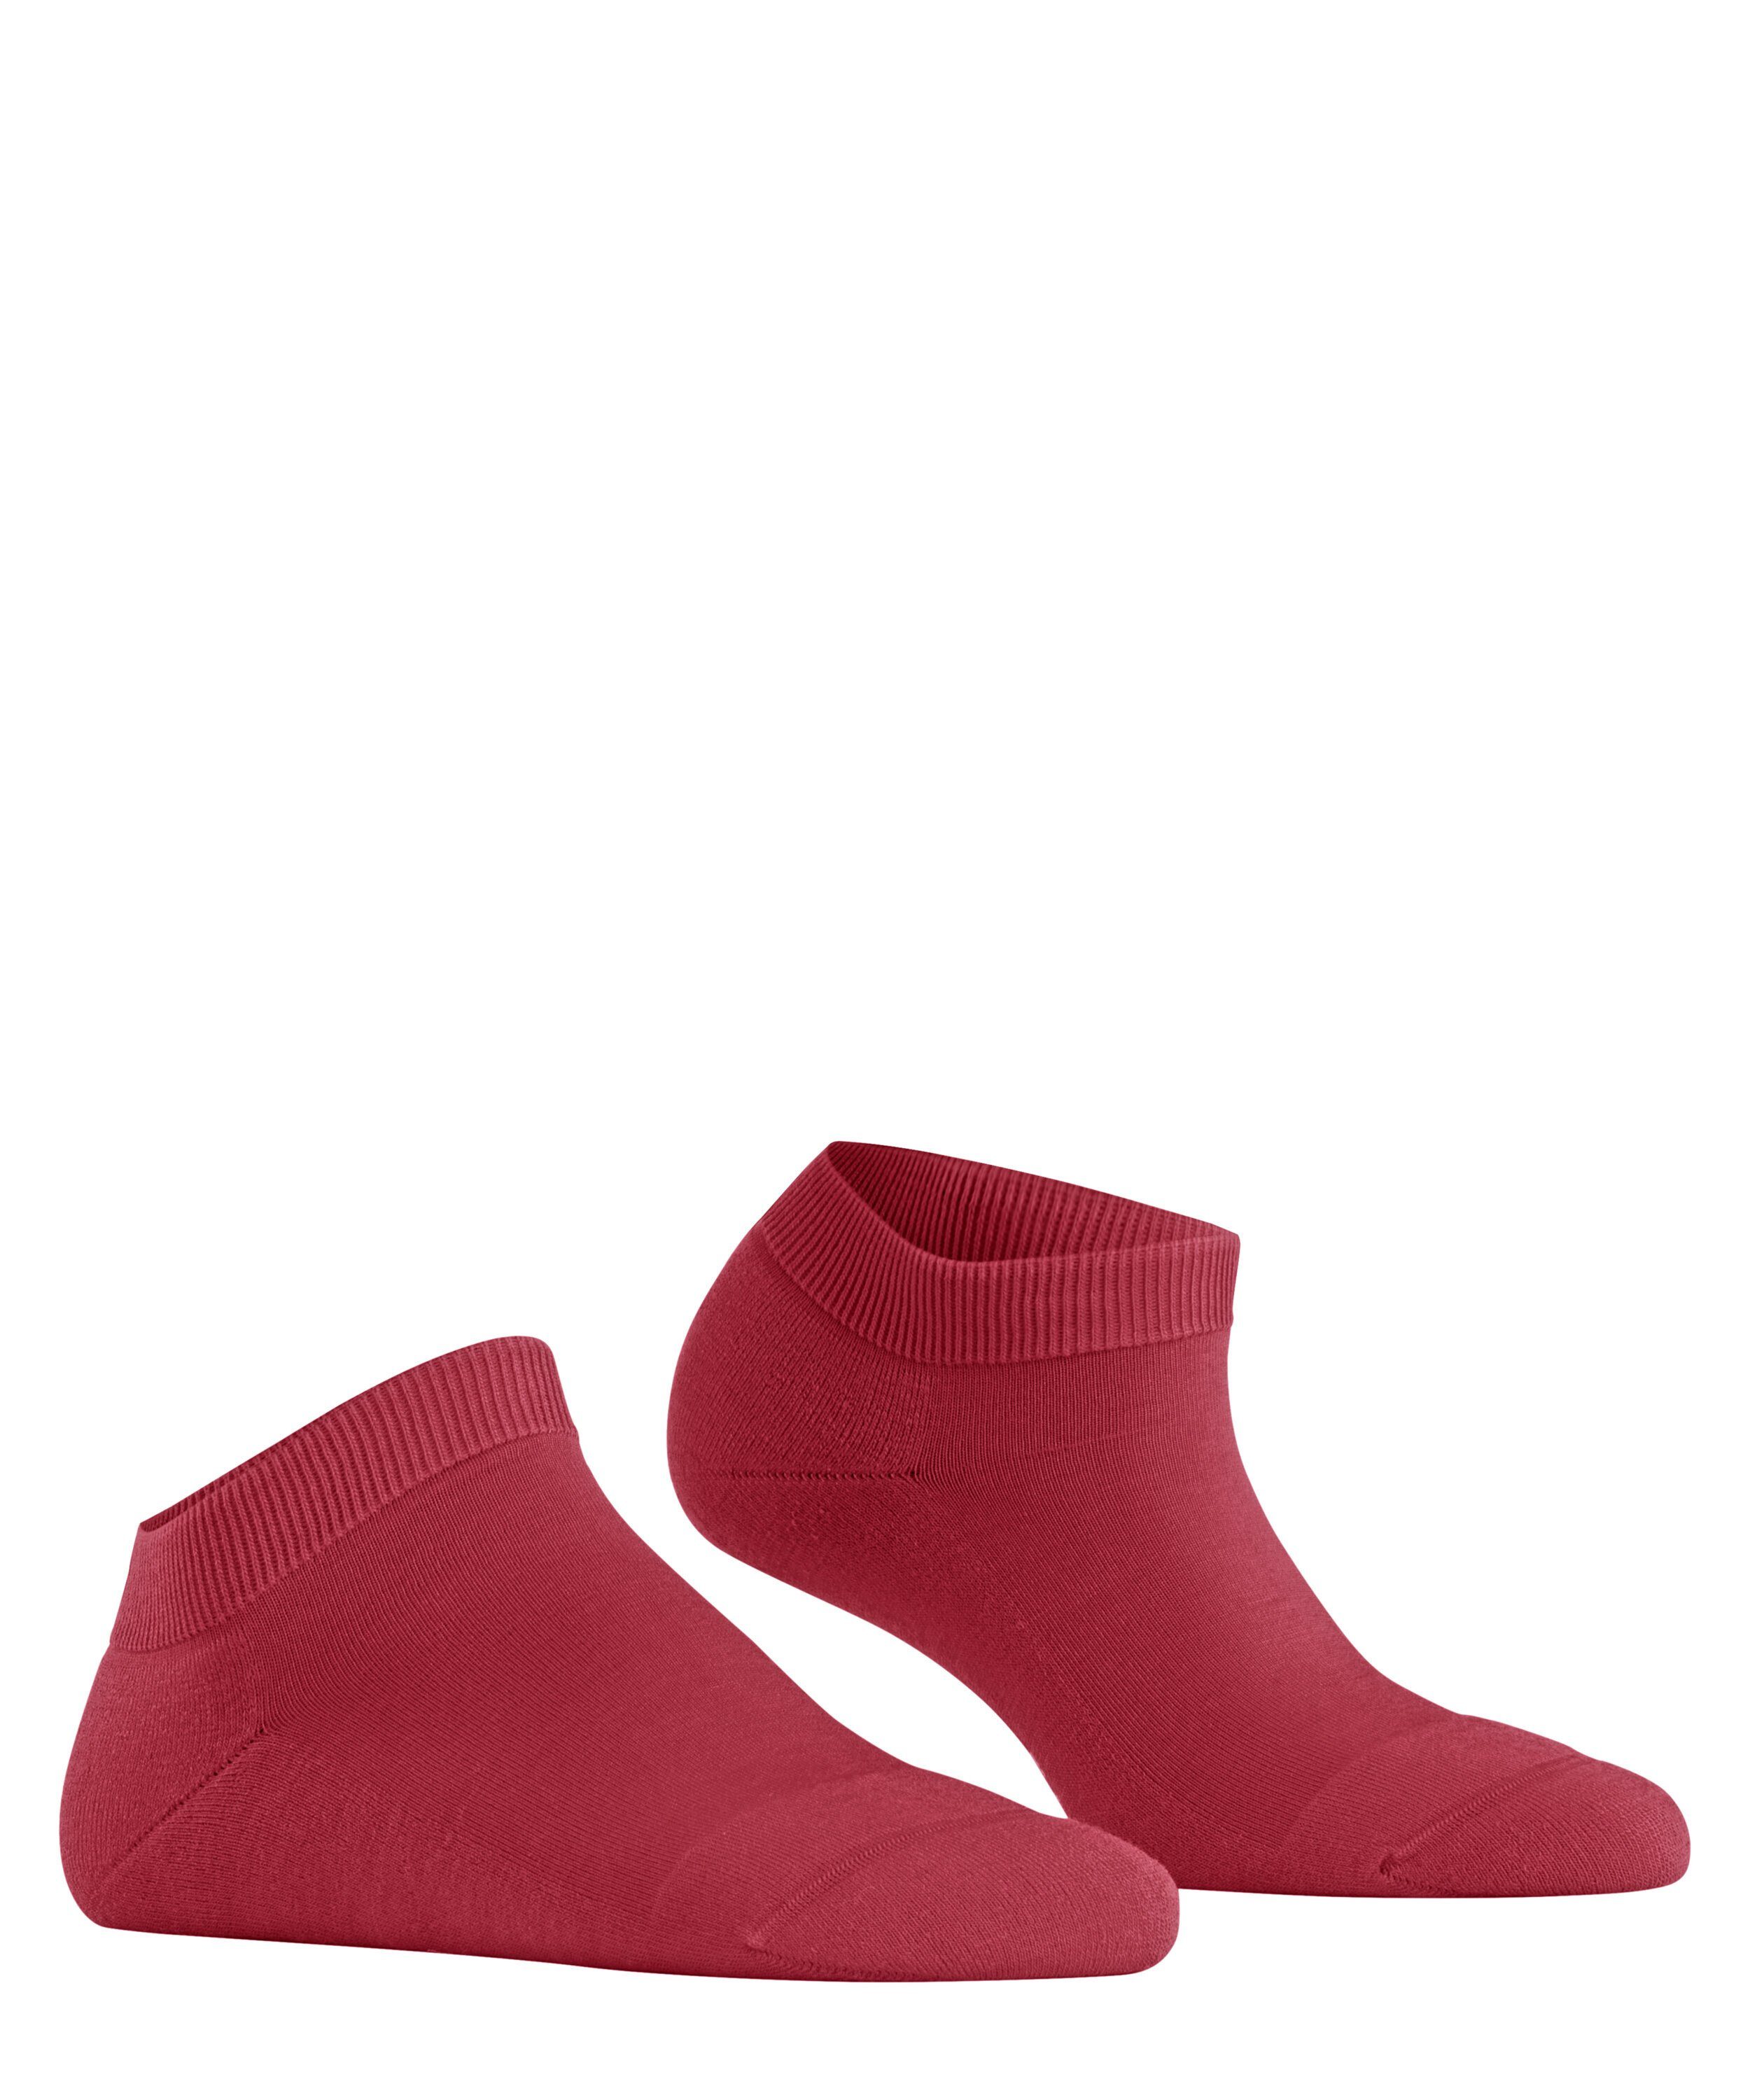 Mischung ClimaWool (1-Paar) aus (8228) klimaregulierender scarlet Wolle-Lyocell FALKE Sneakersocken